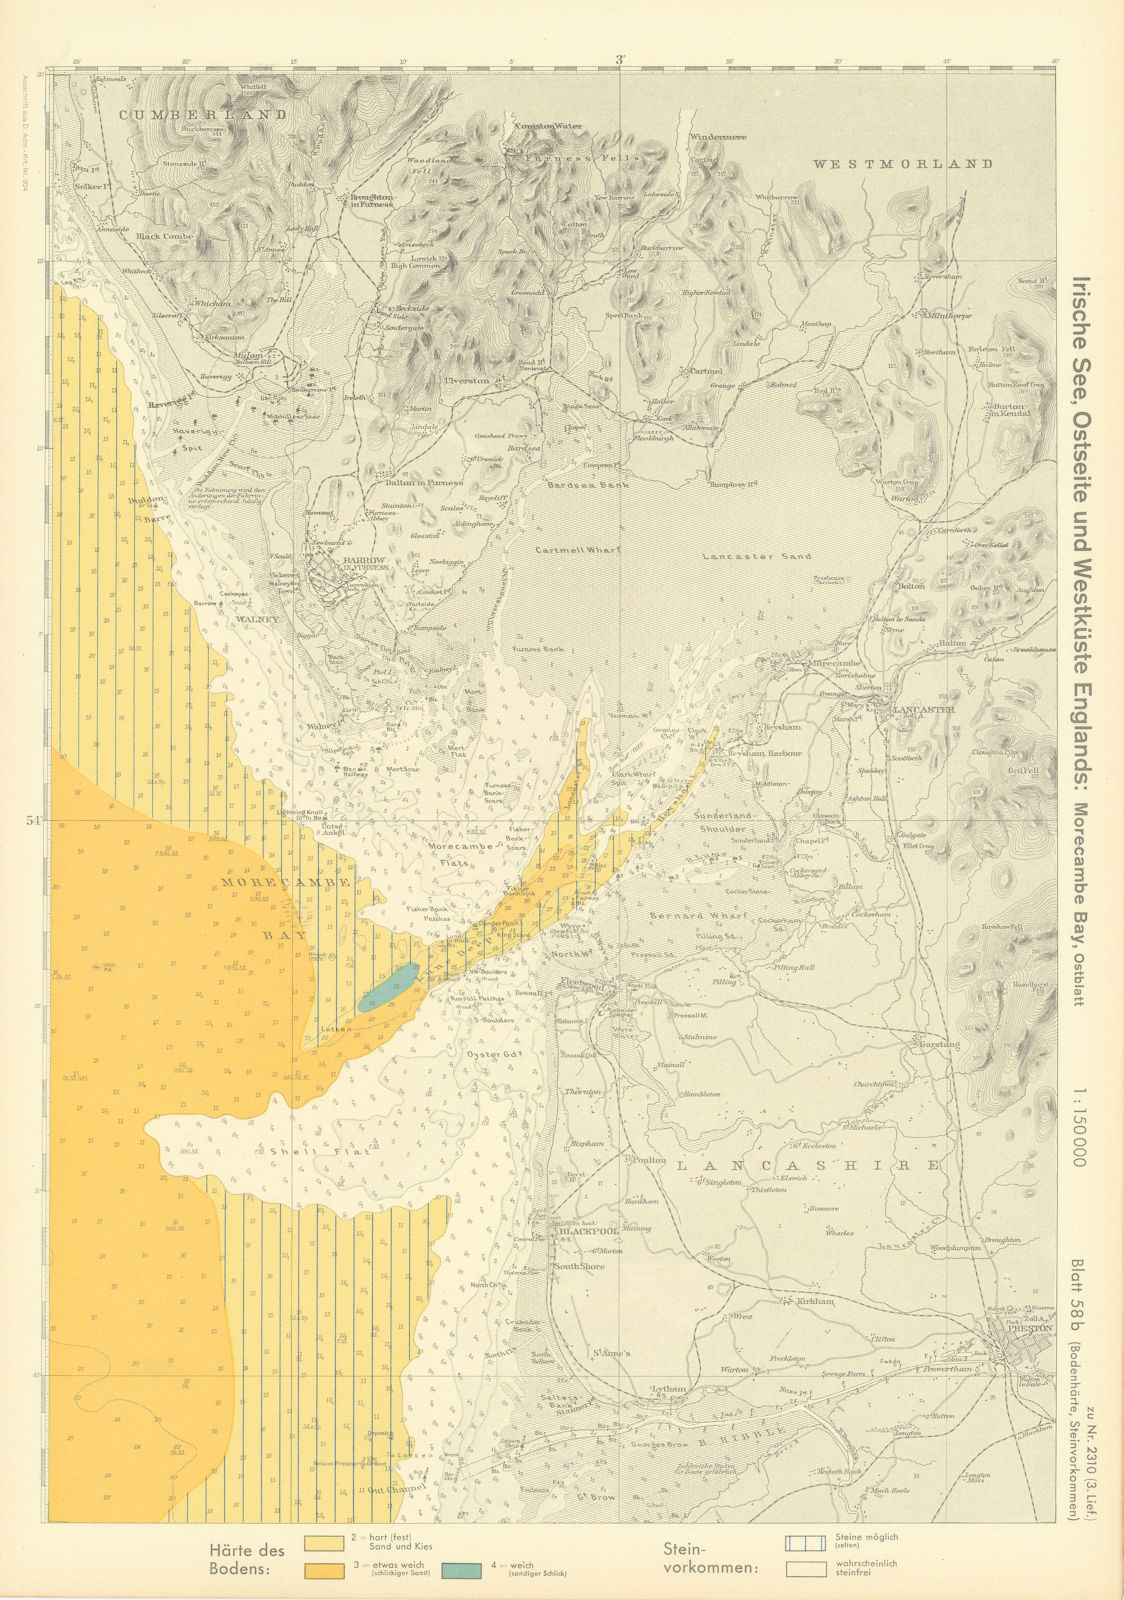 58b. Morecambe Bay. Lancashire Cumbria coast. Barrow. KRIEGSMARINE Nazi map 1940